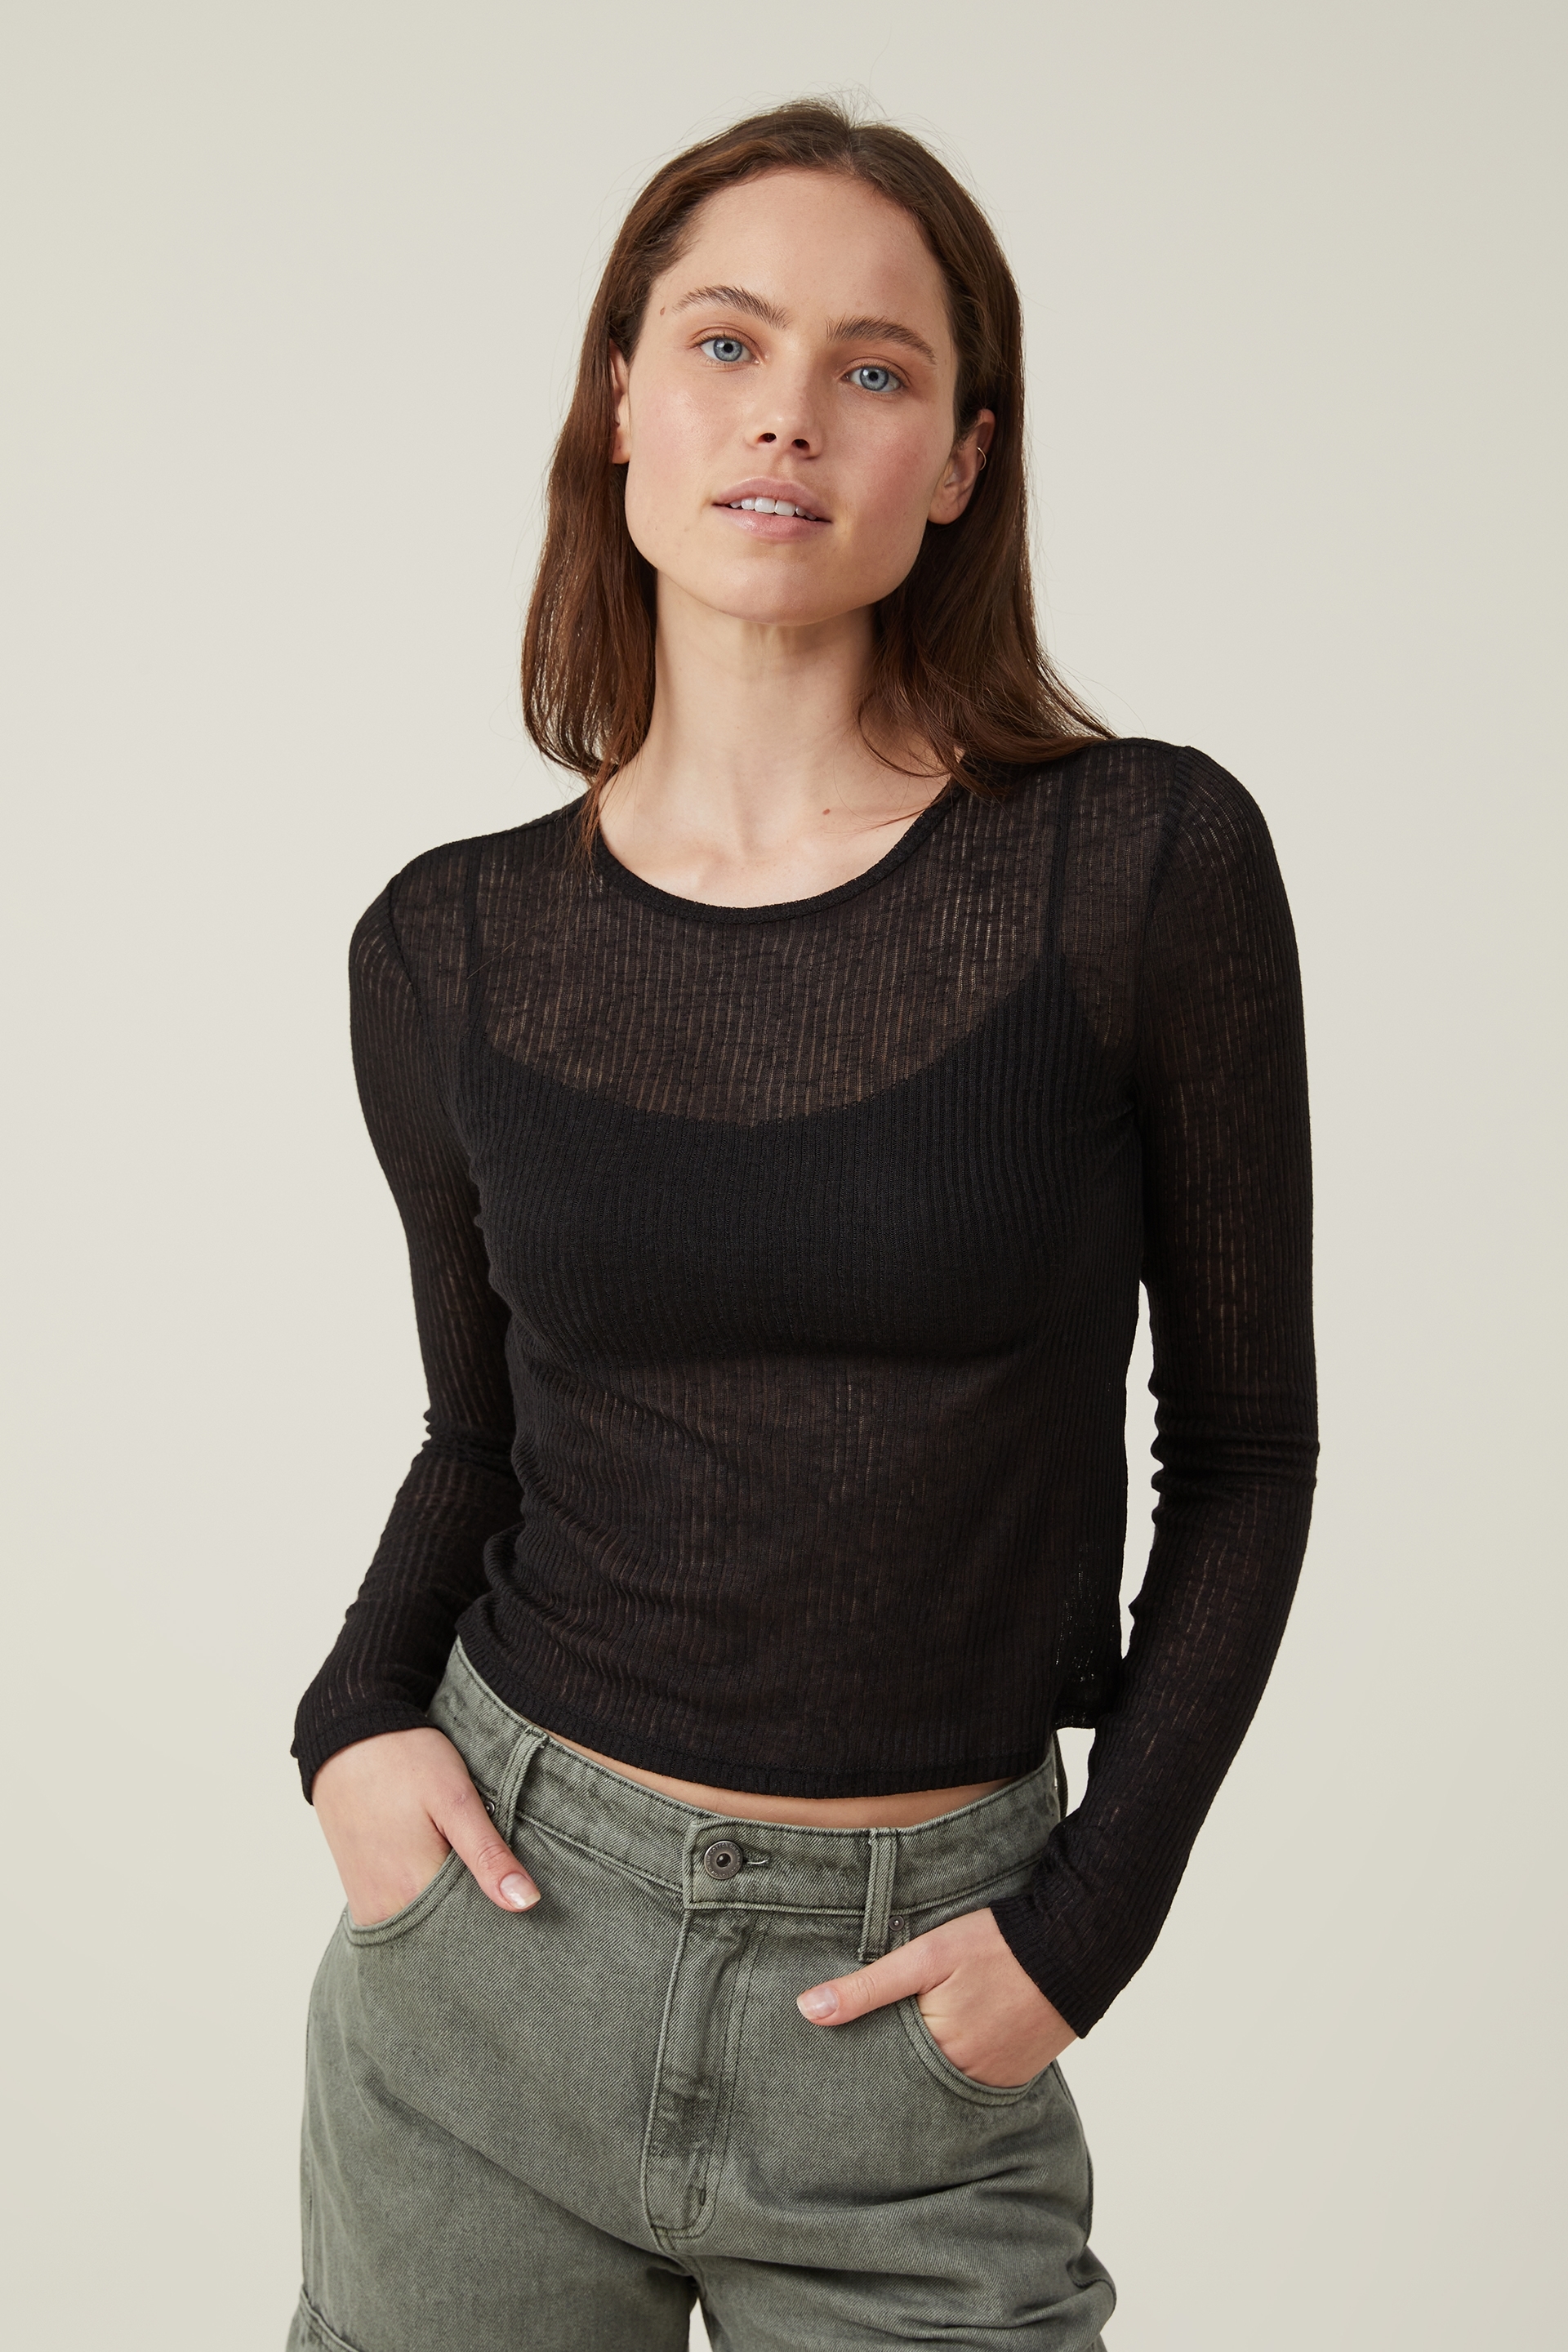 Cotton On Women - Ricki Sheer Rib Long Sleeve Top - Black